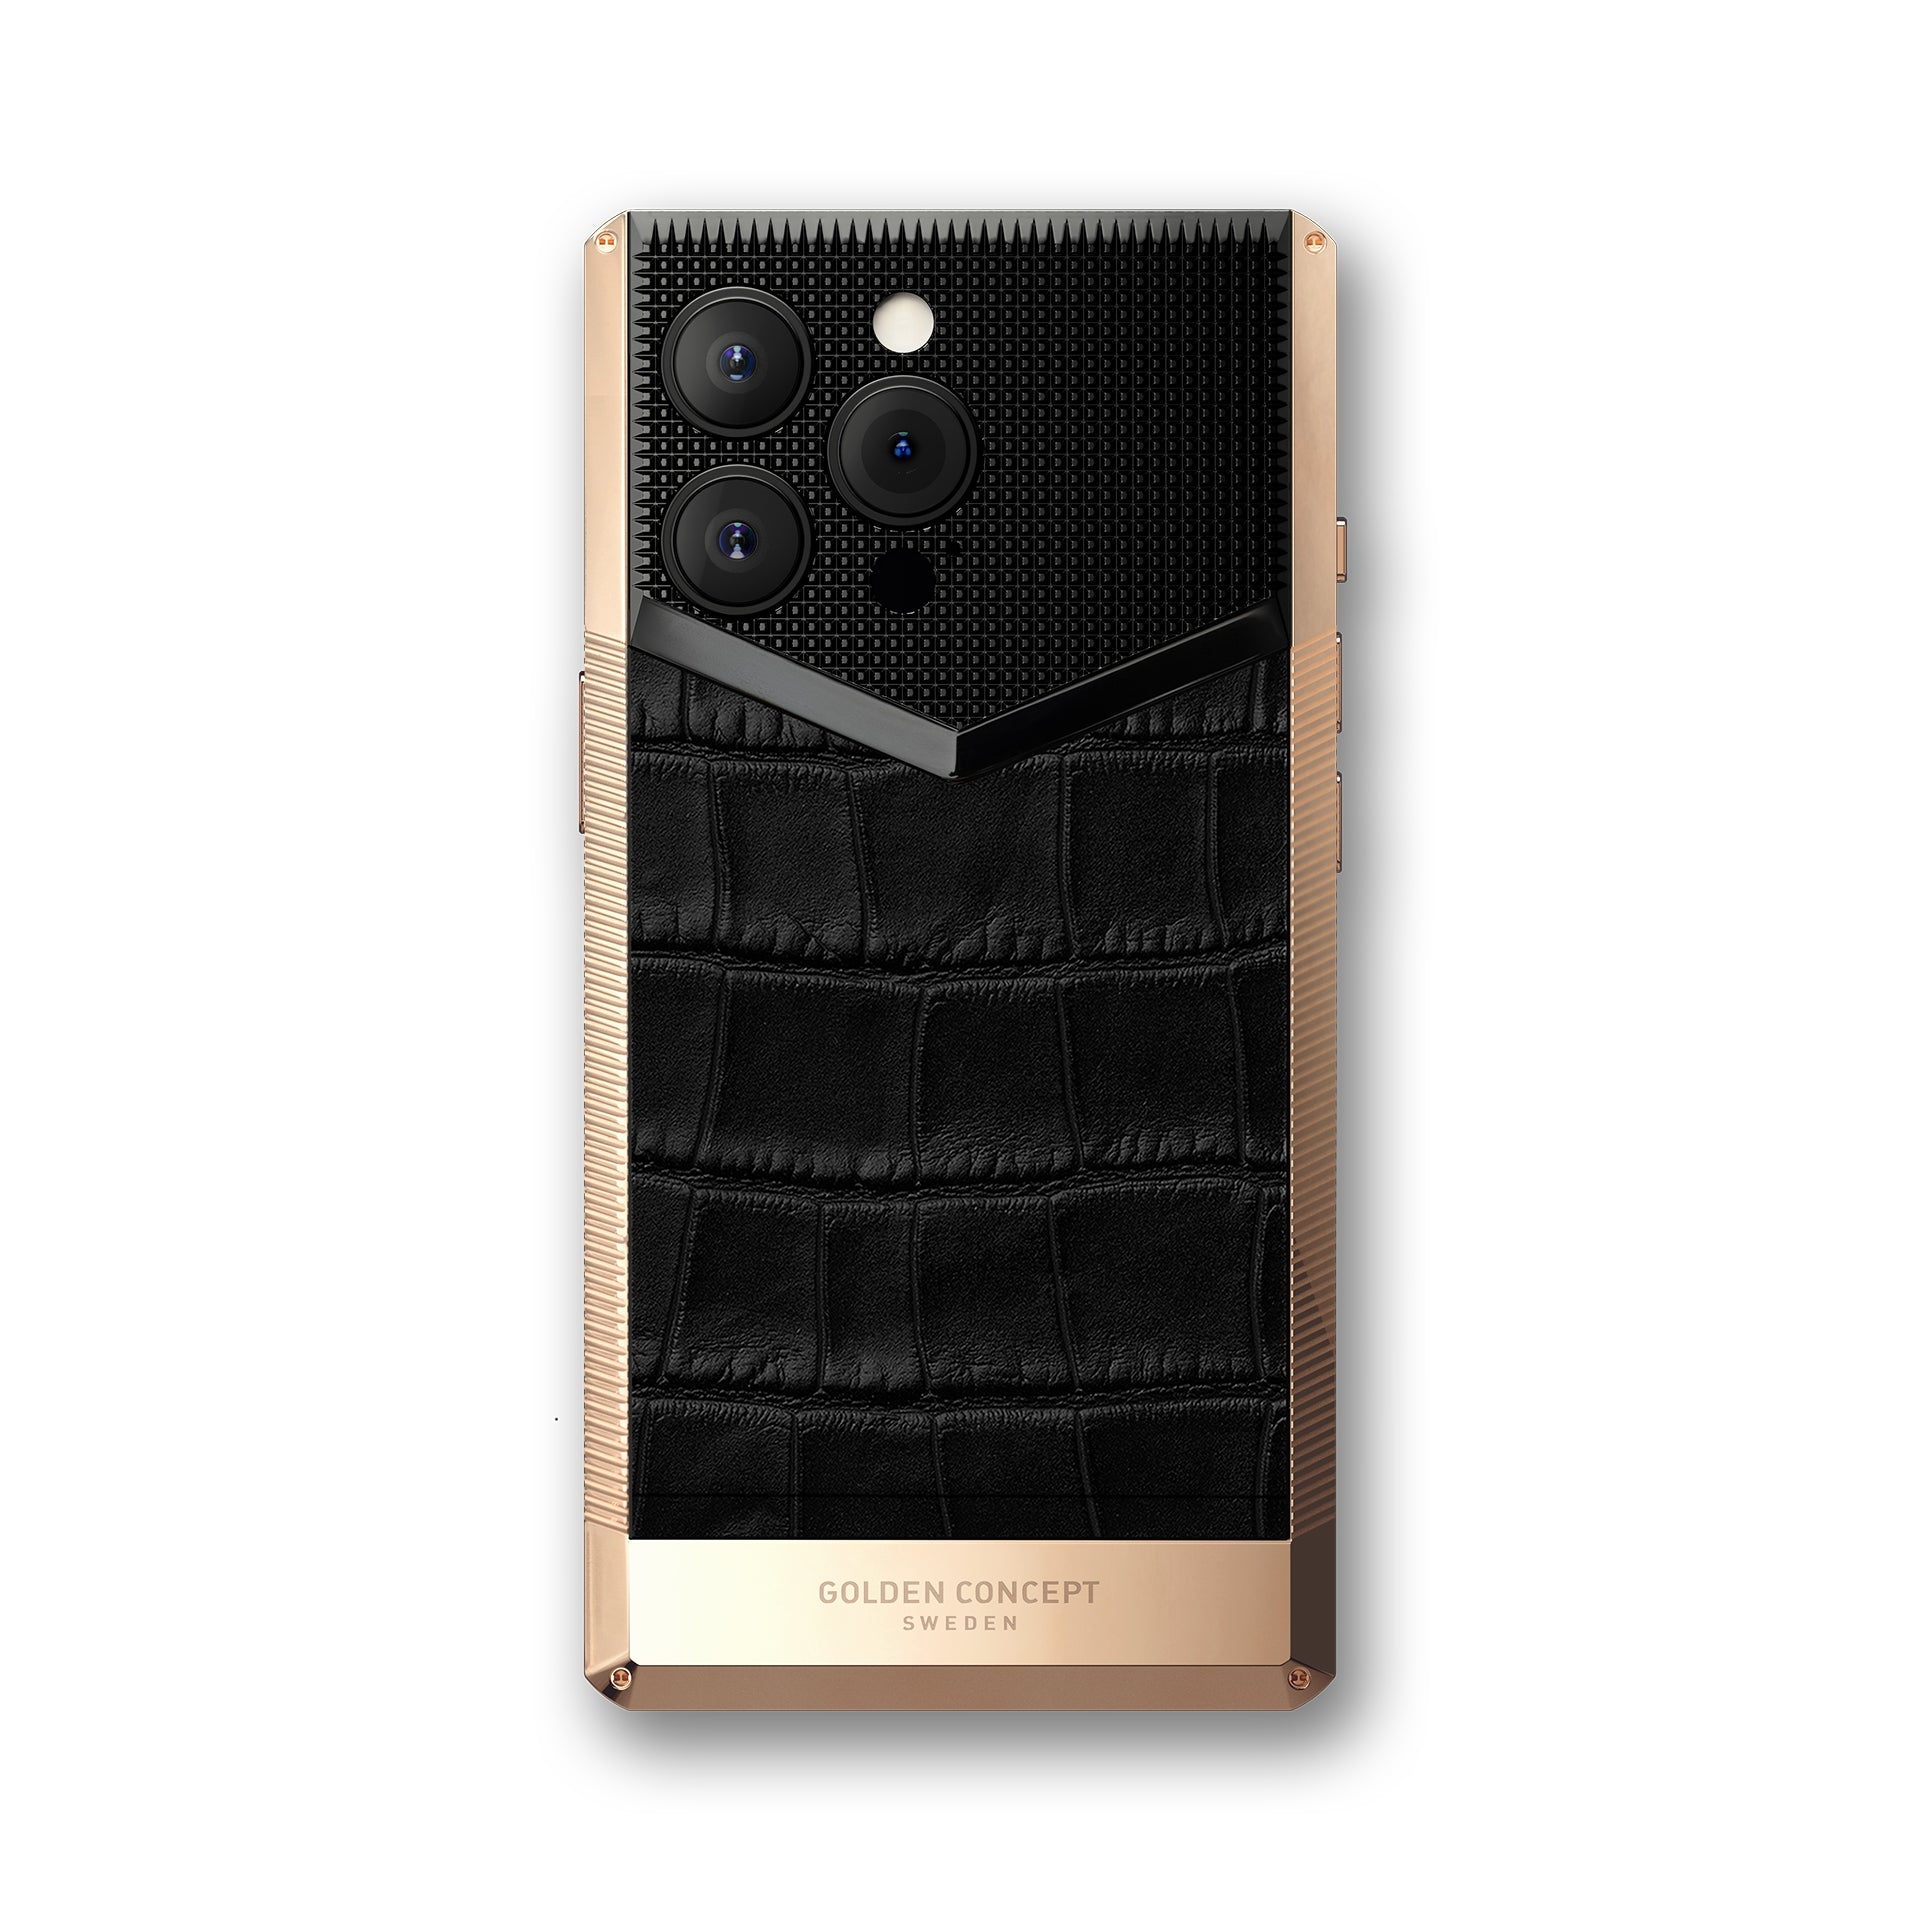 Golden Concept - iPhone Case / CLS - Rose Gold